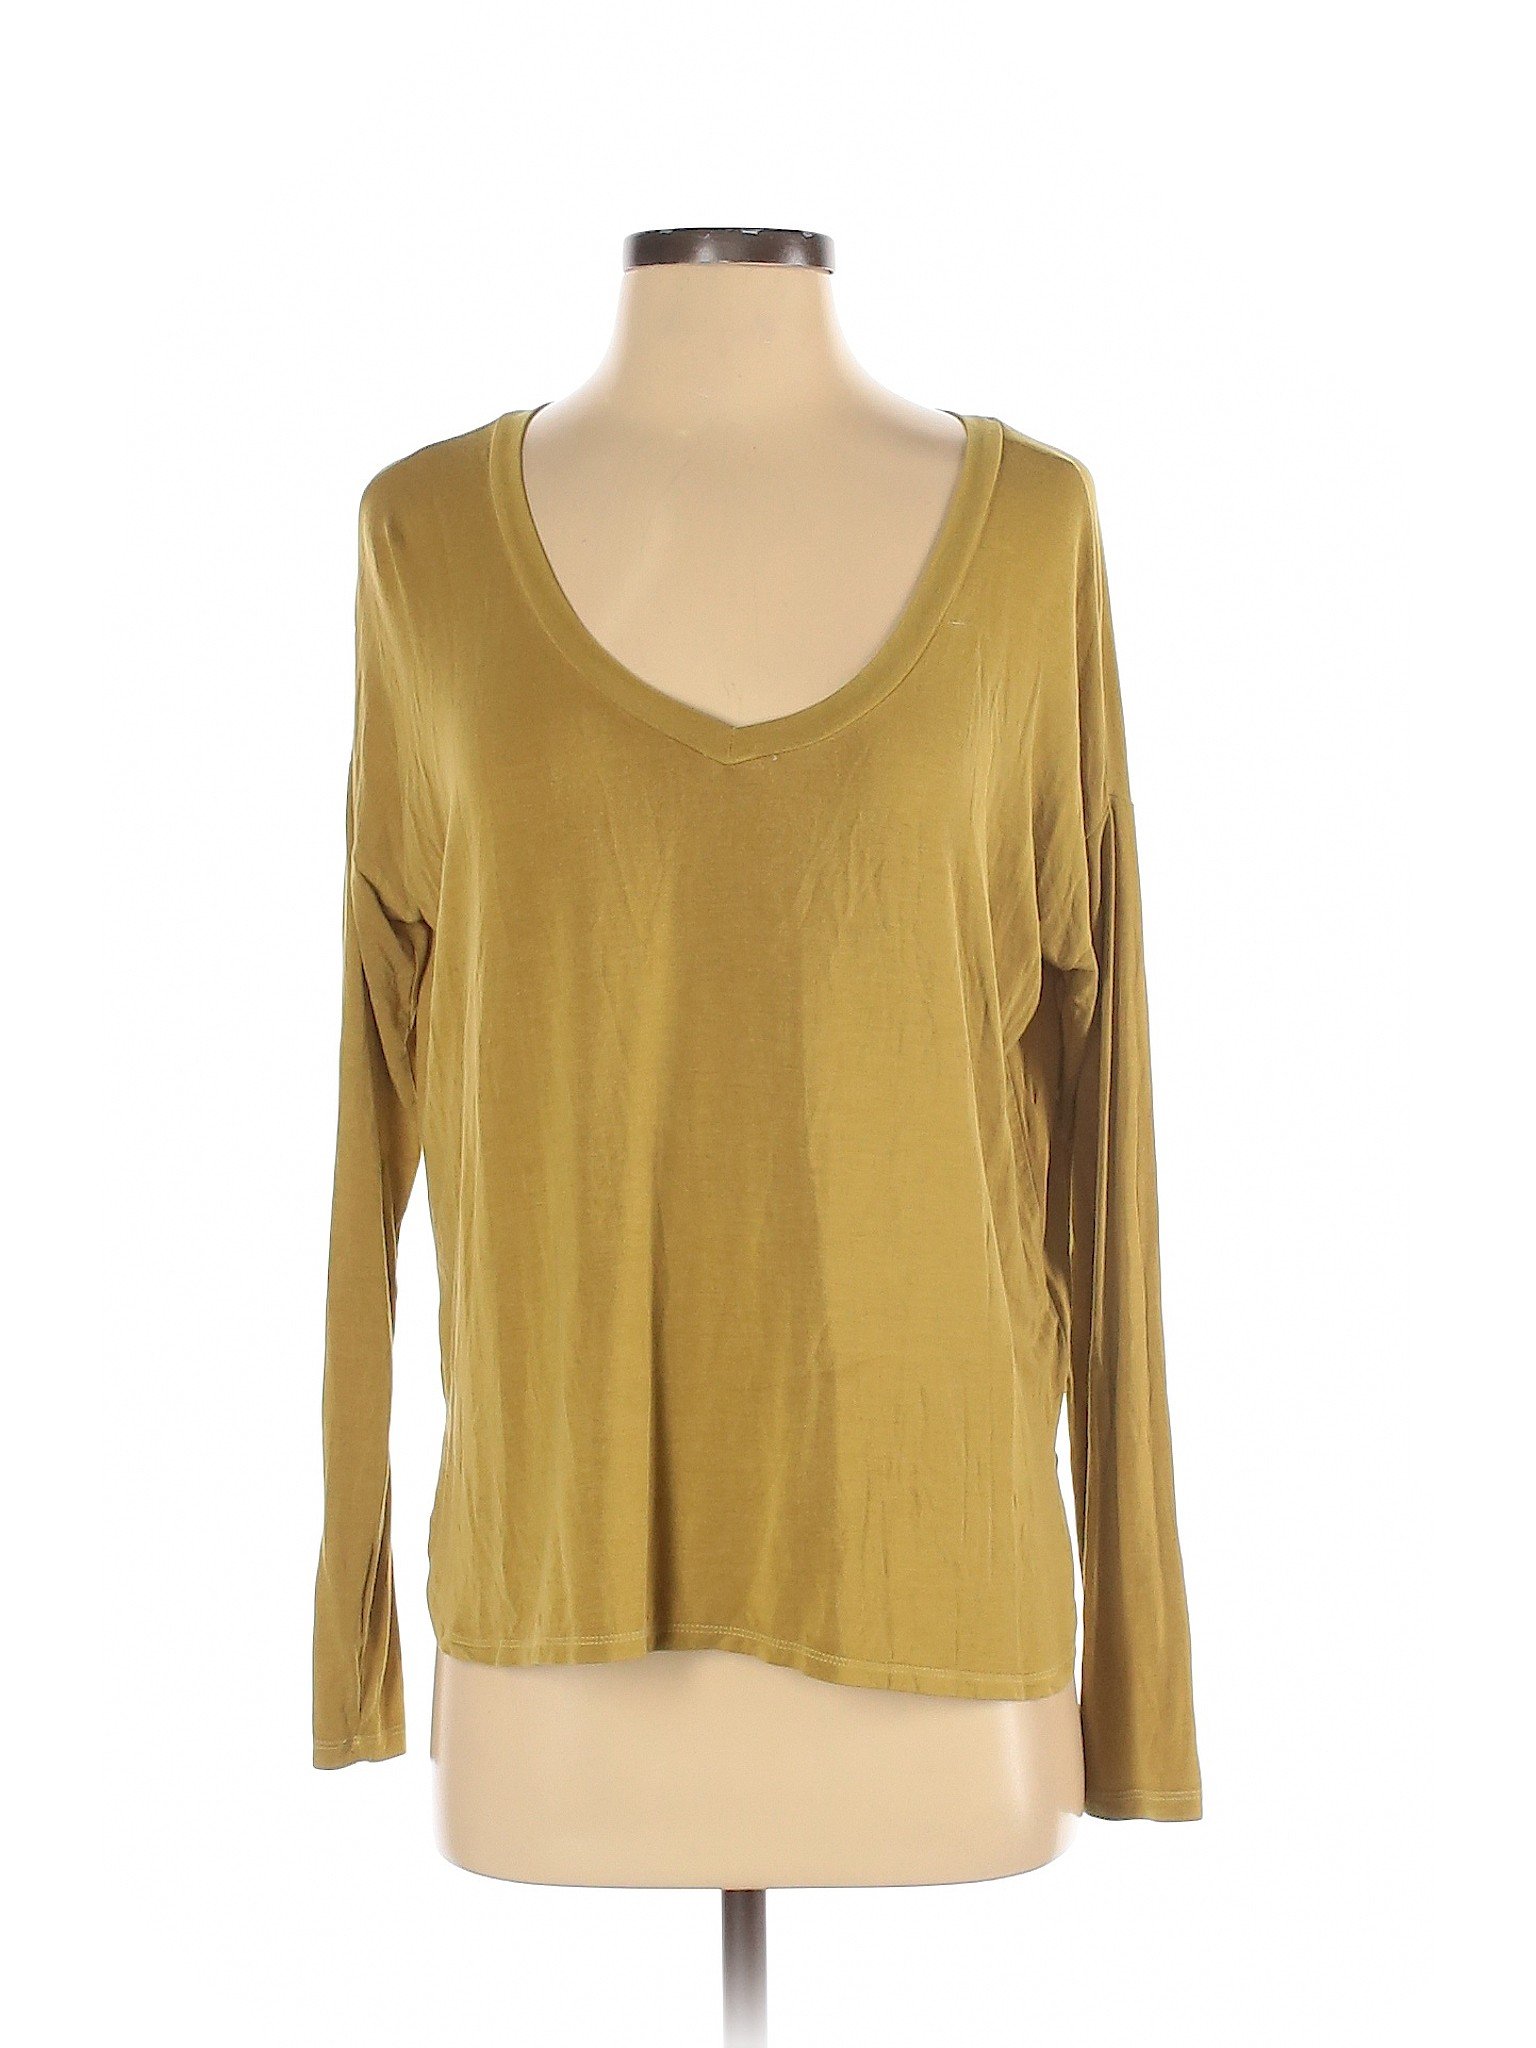 American Eagle Outfitters Women Yellow Long Sleeve T-Shirt XS | eBay